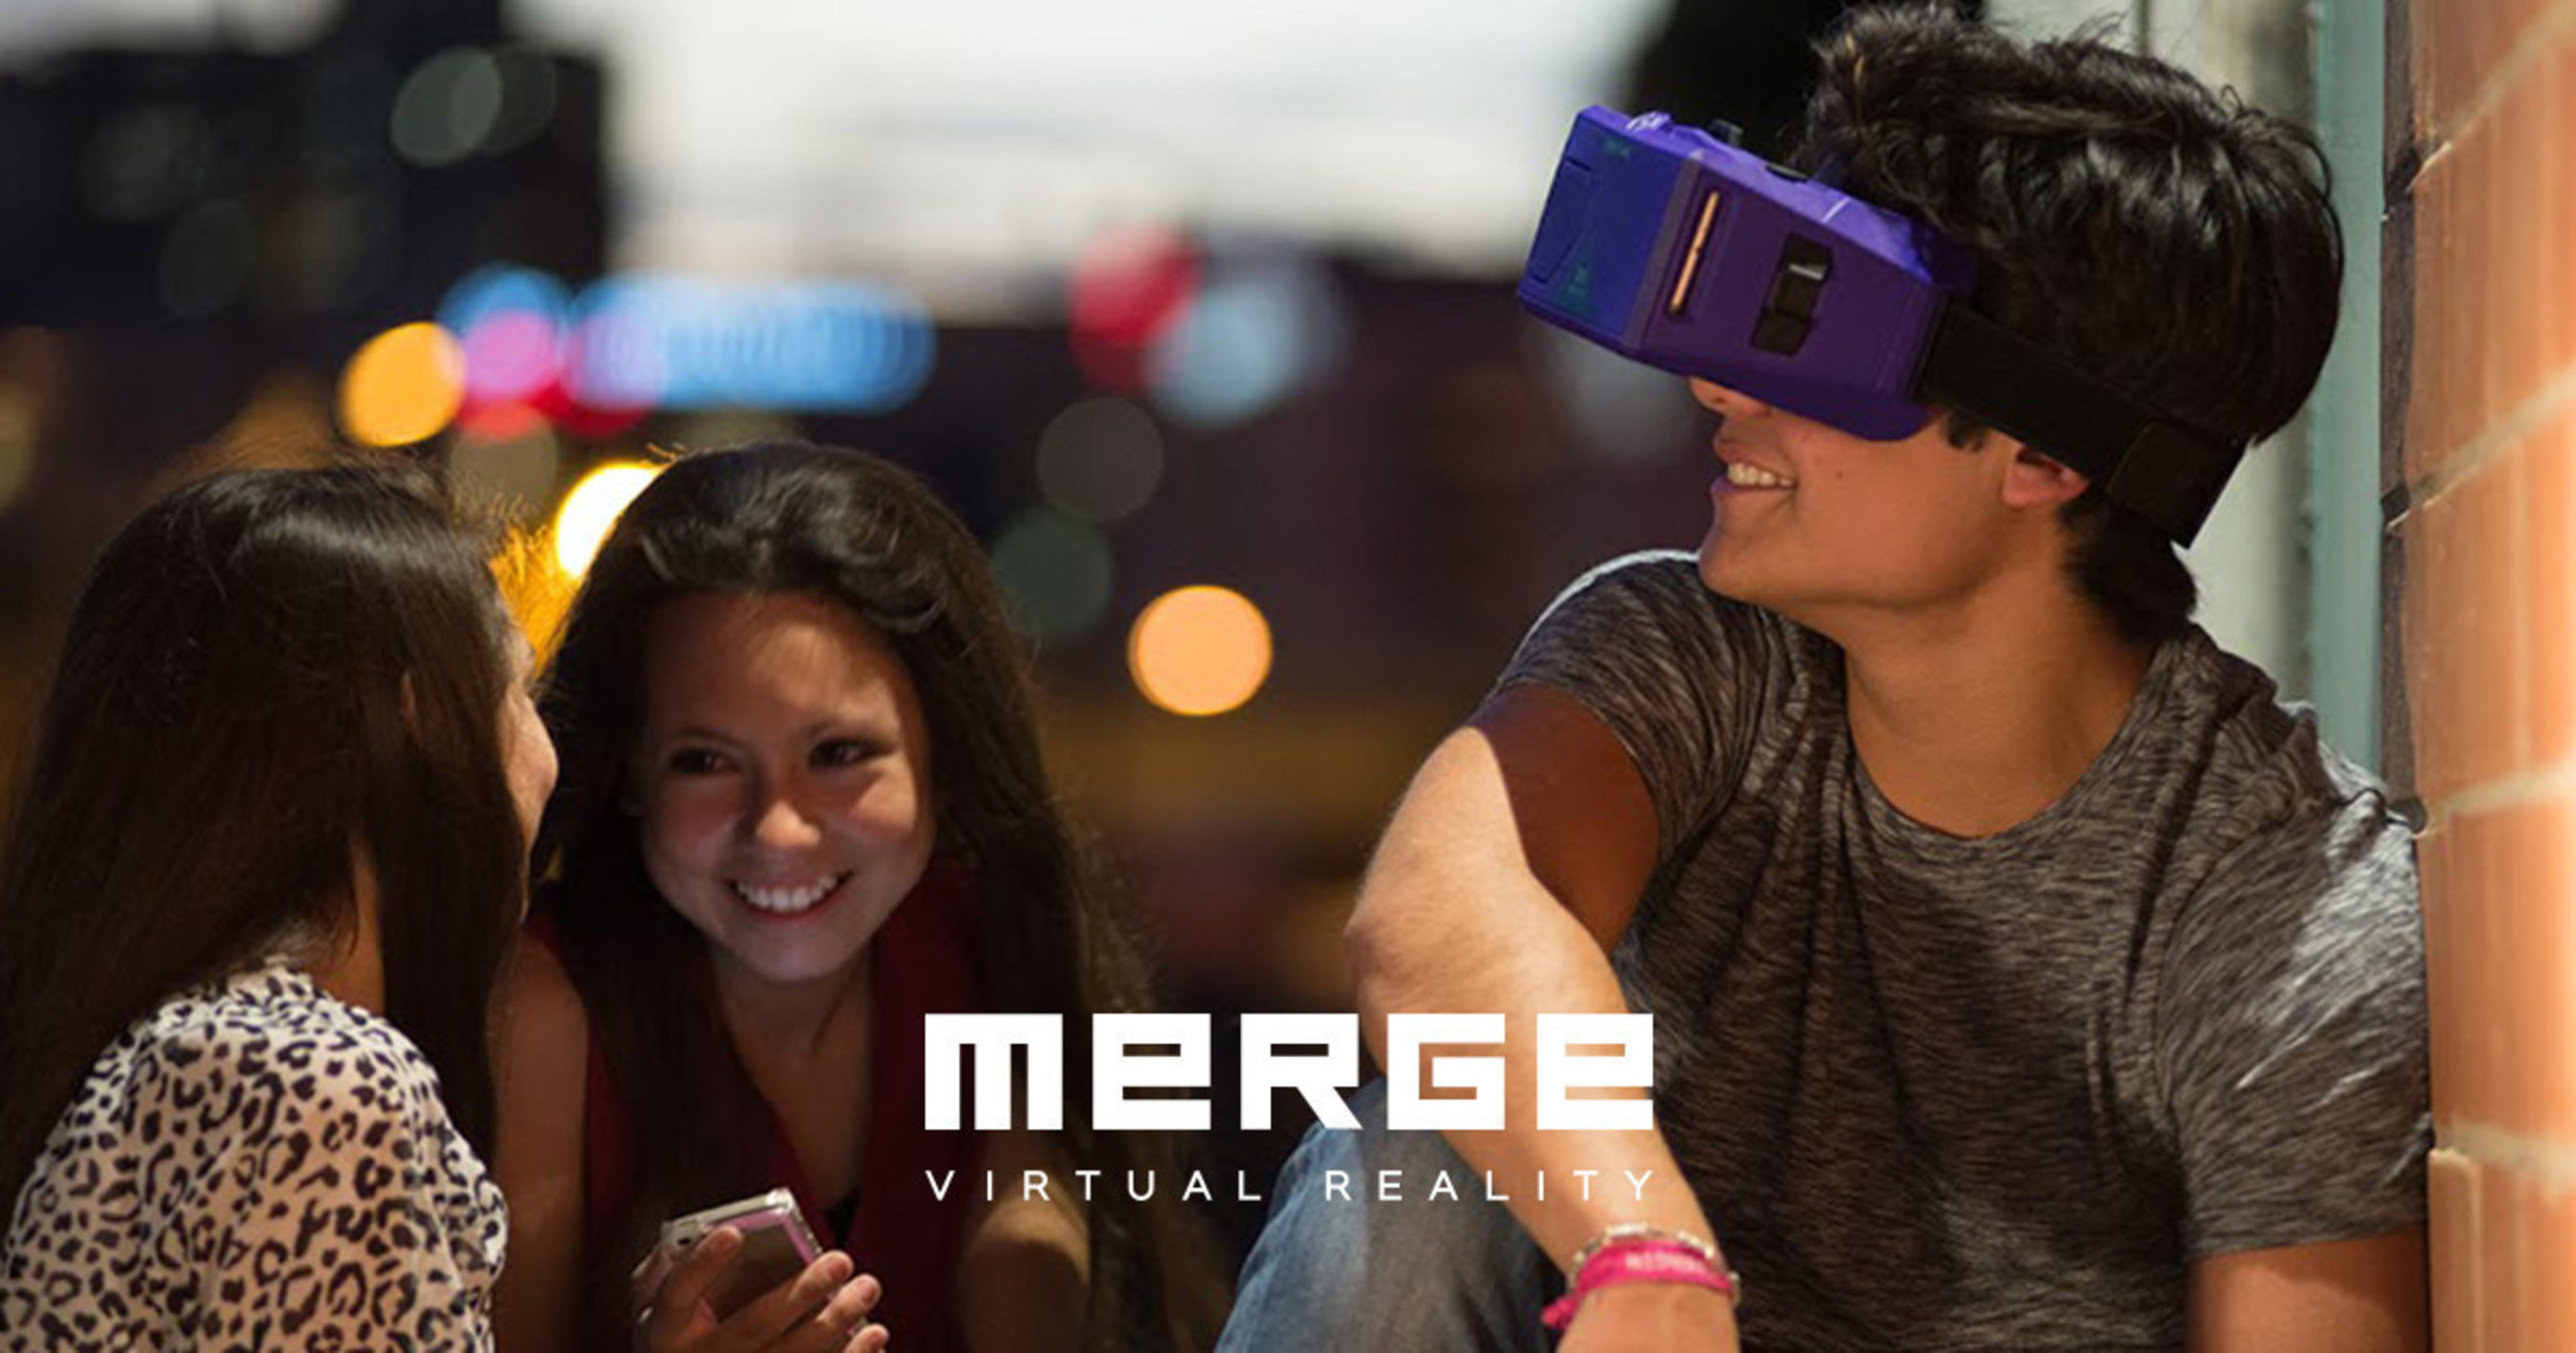 Merge VR's universal virtual reality headset hits U.S. retail shelves as mobile VR goes mainstream